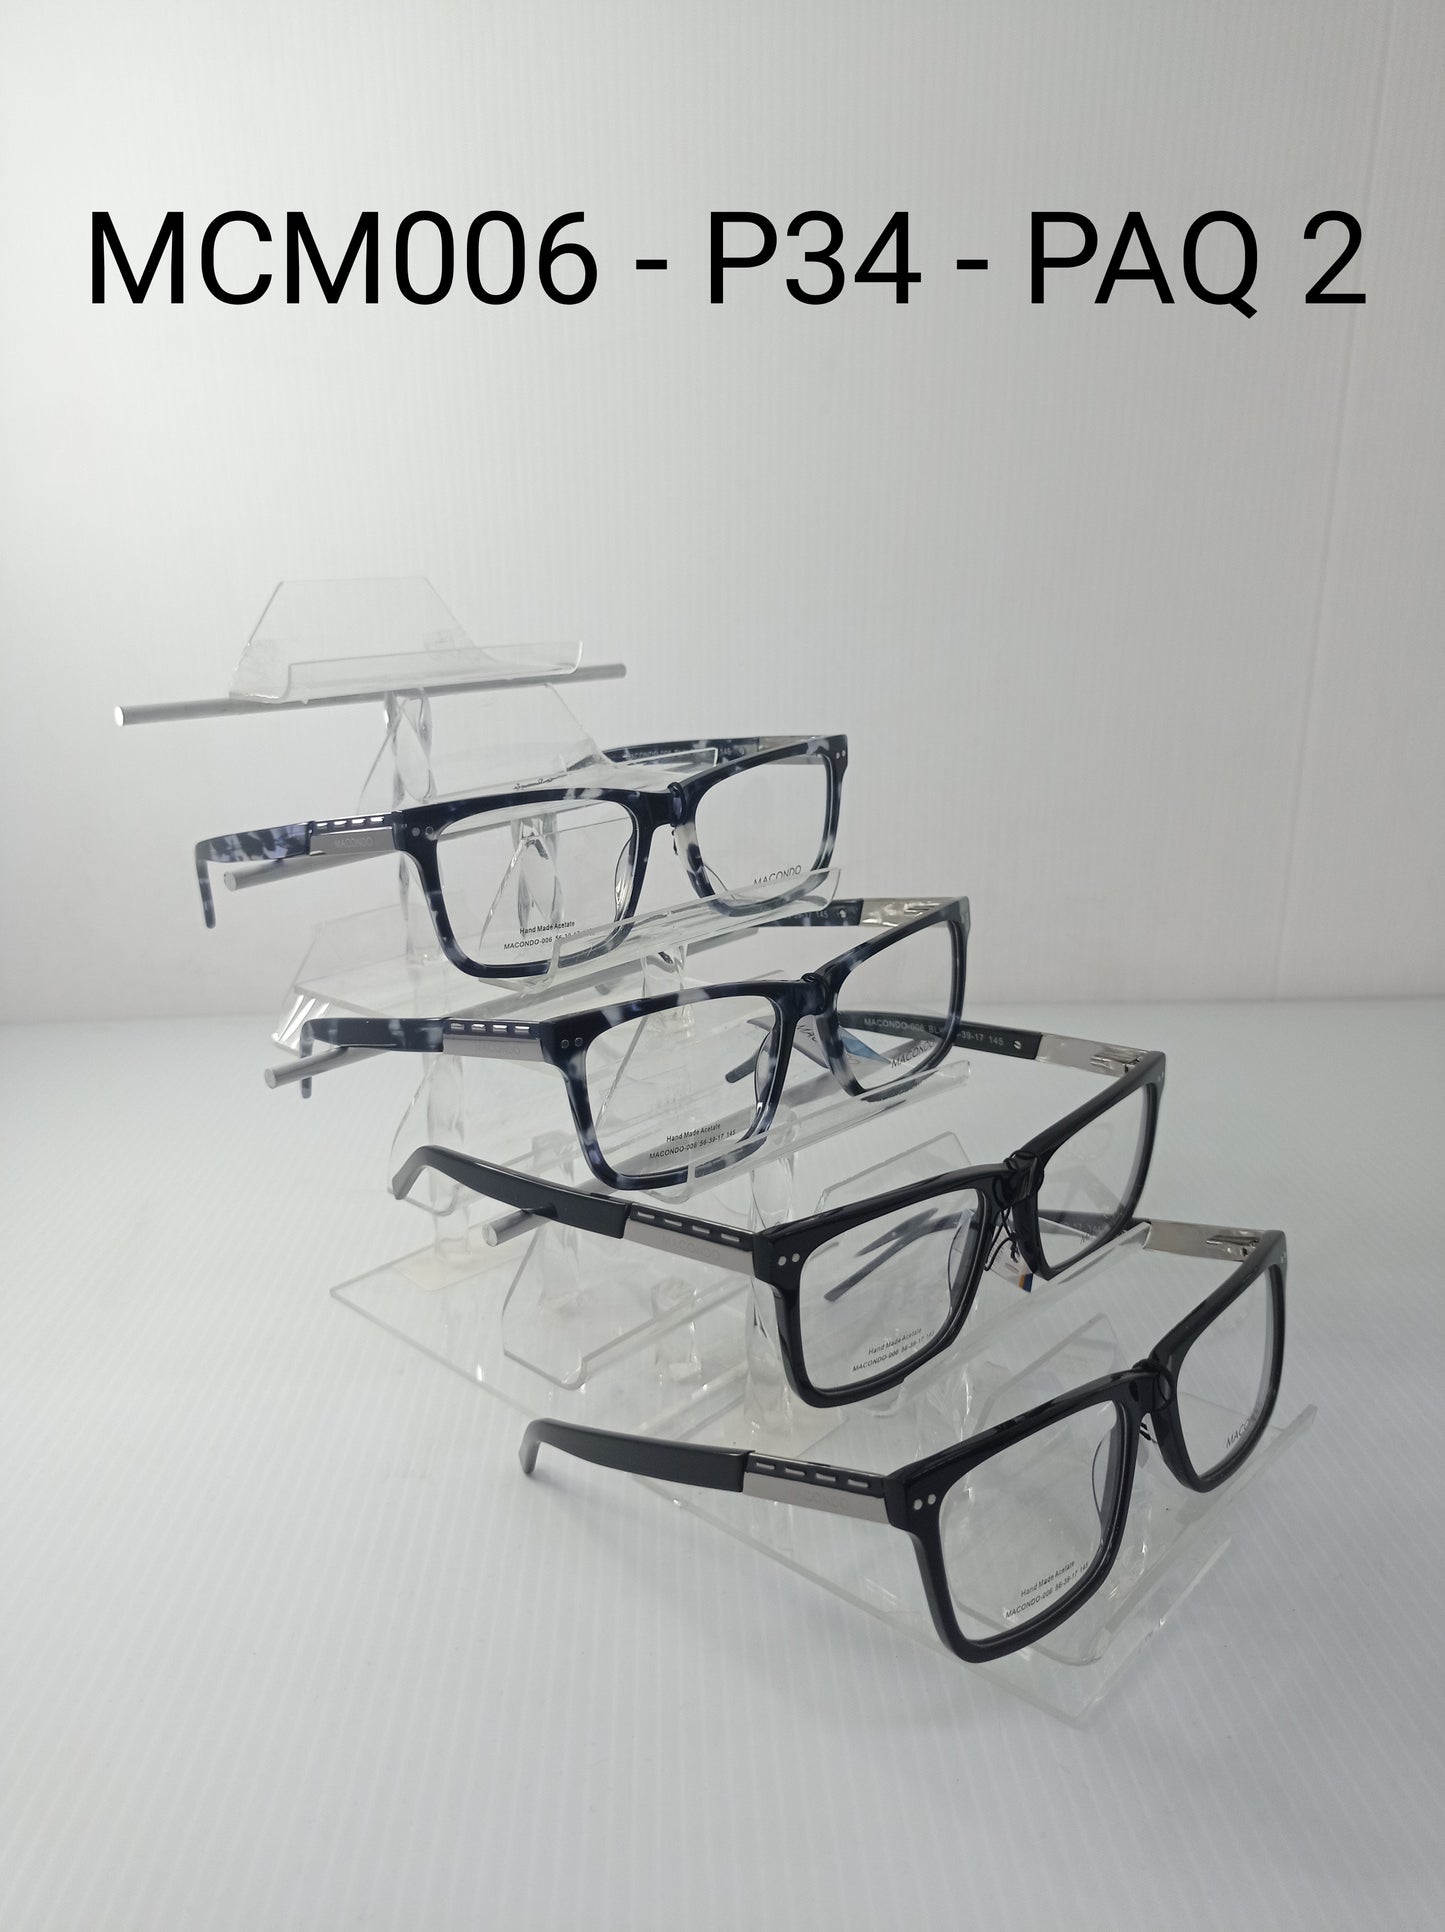 MACONDO - MCM006 - P34